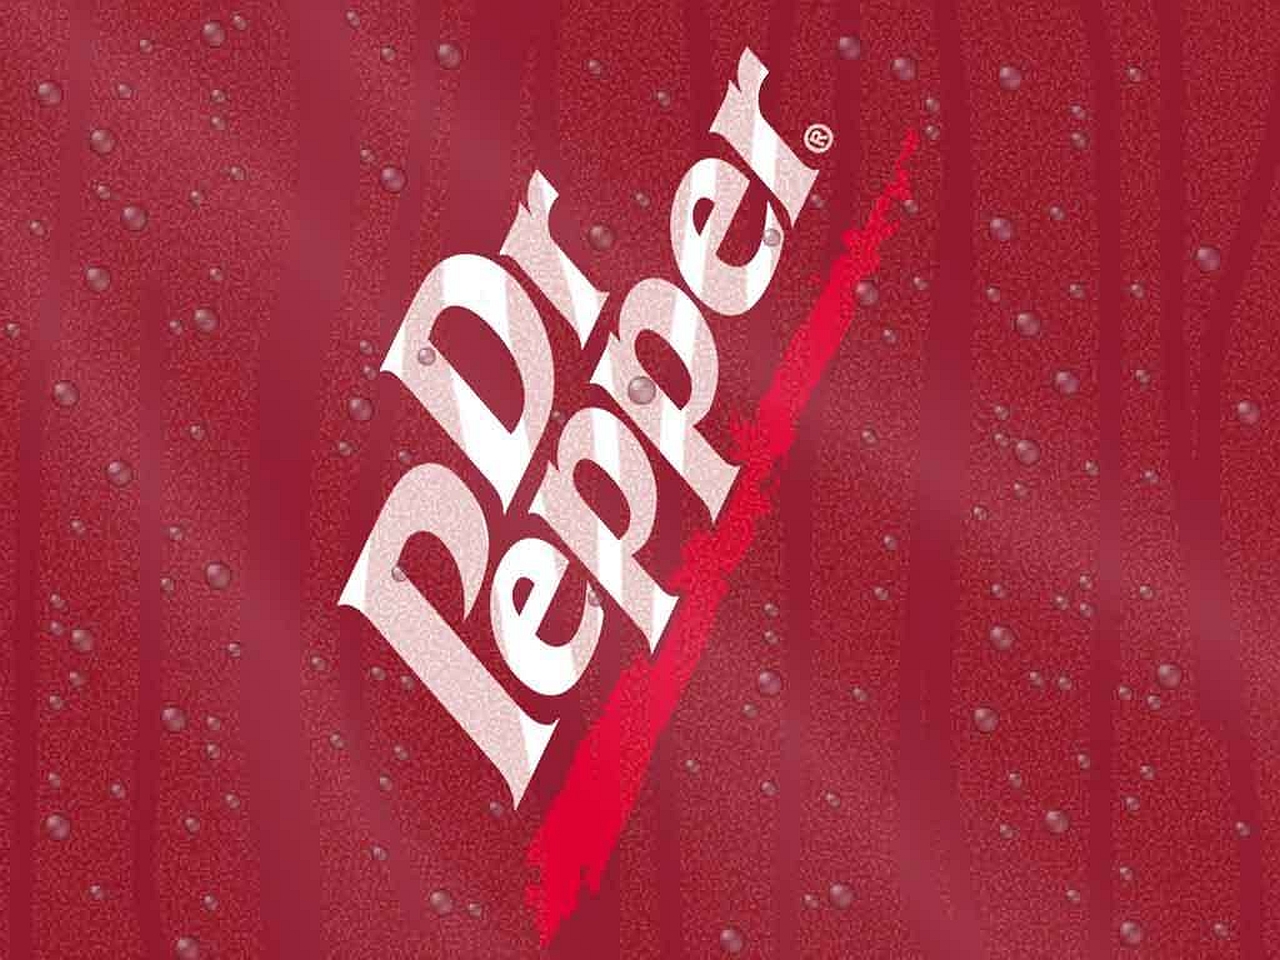 Los mejores fondos de pantalla de Dr Pepper para la pantalla del teléfono